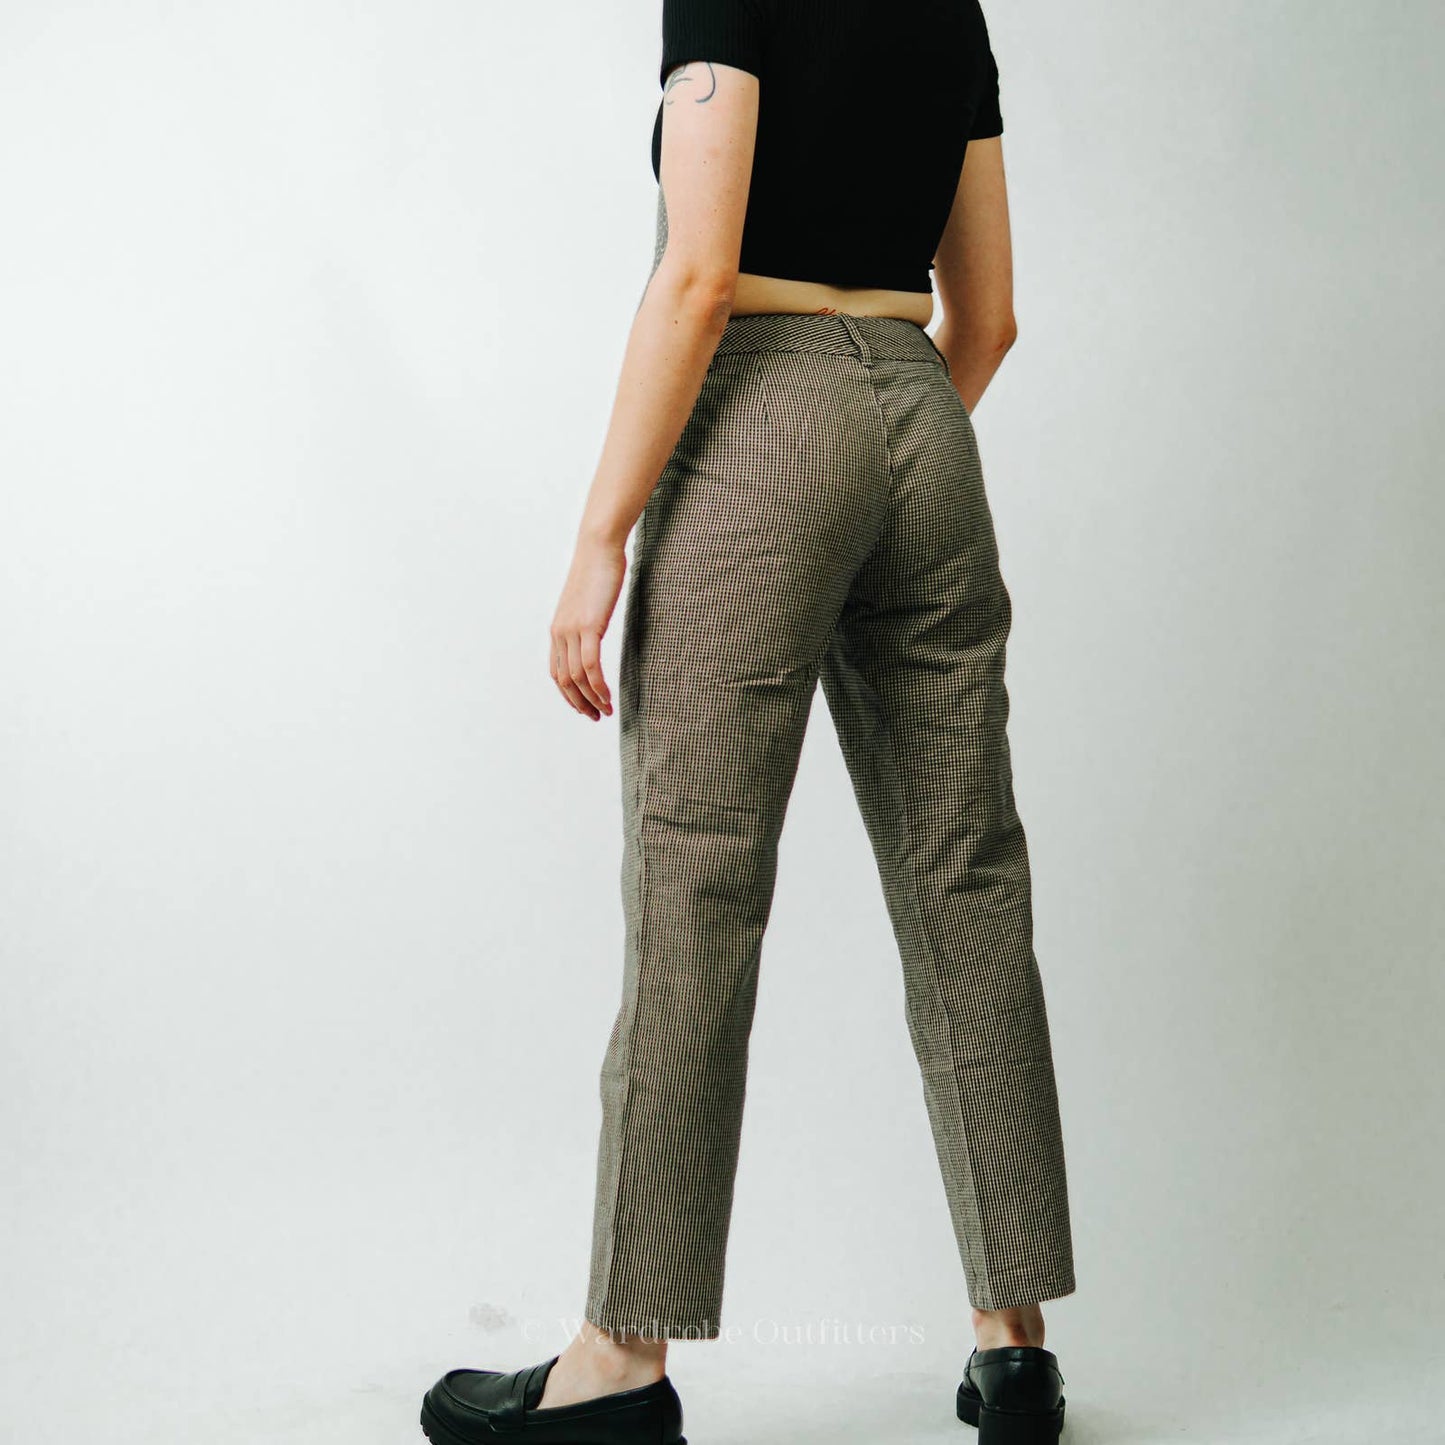 Lizwear Liz Claiborne Gingham Checker Plaid Trouser Pants - 6